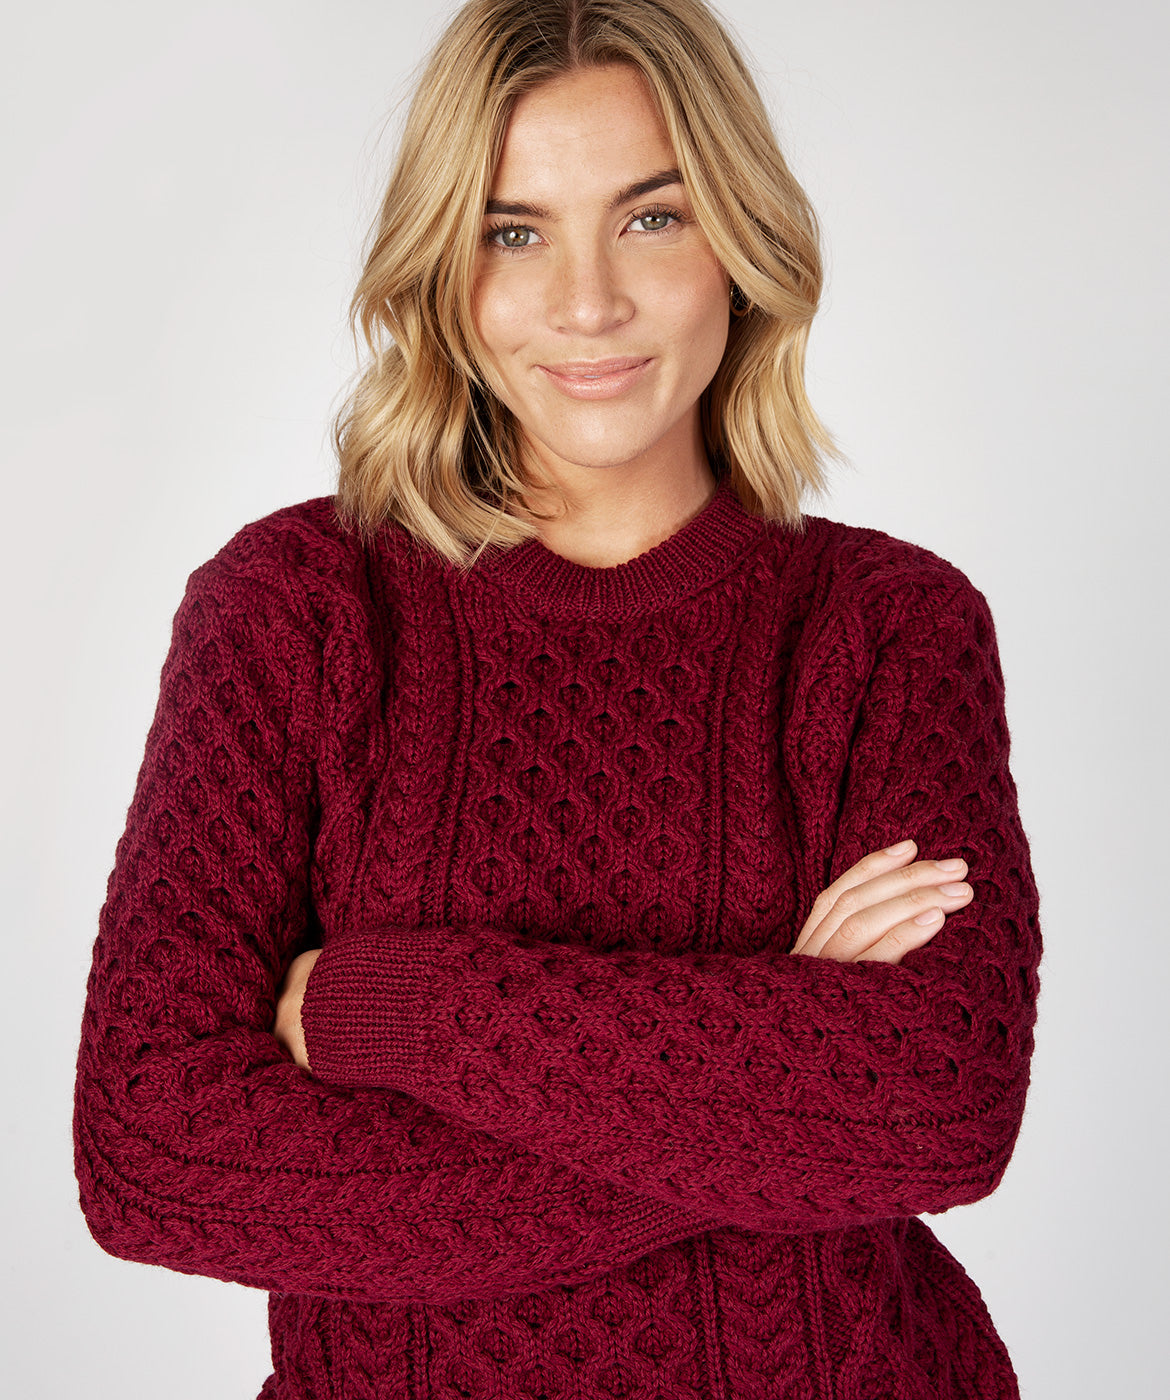 Women's Crewneck Aran Sweater